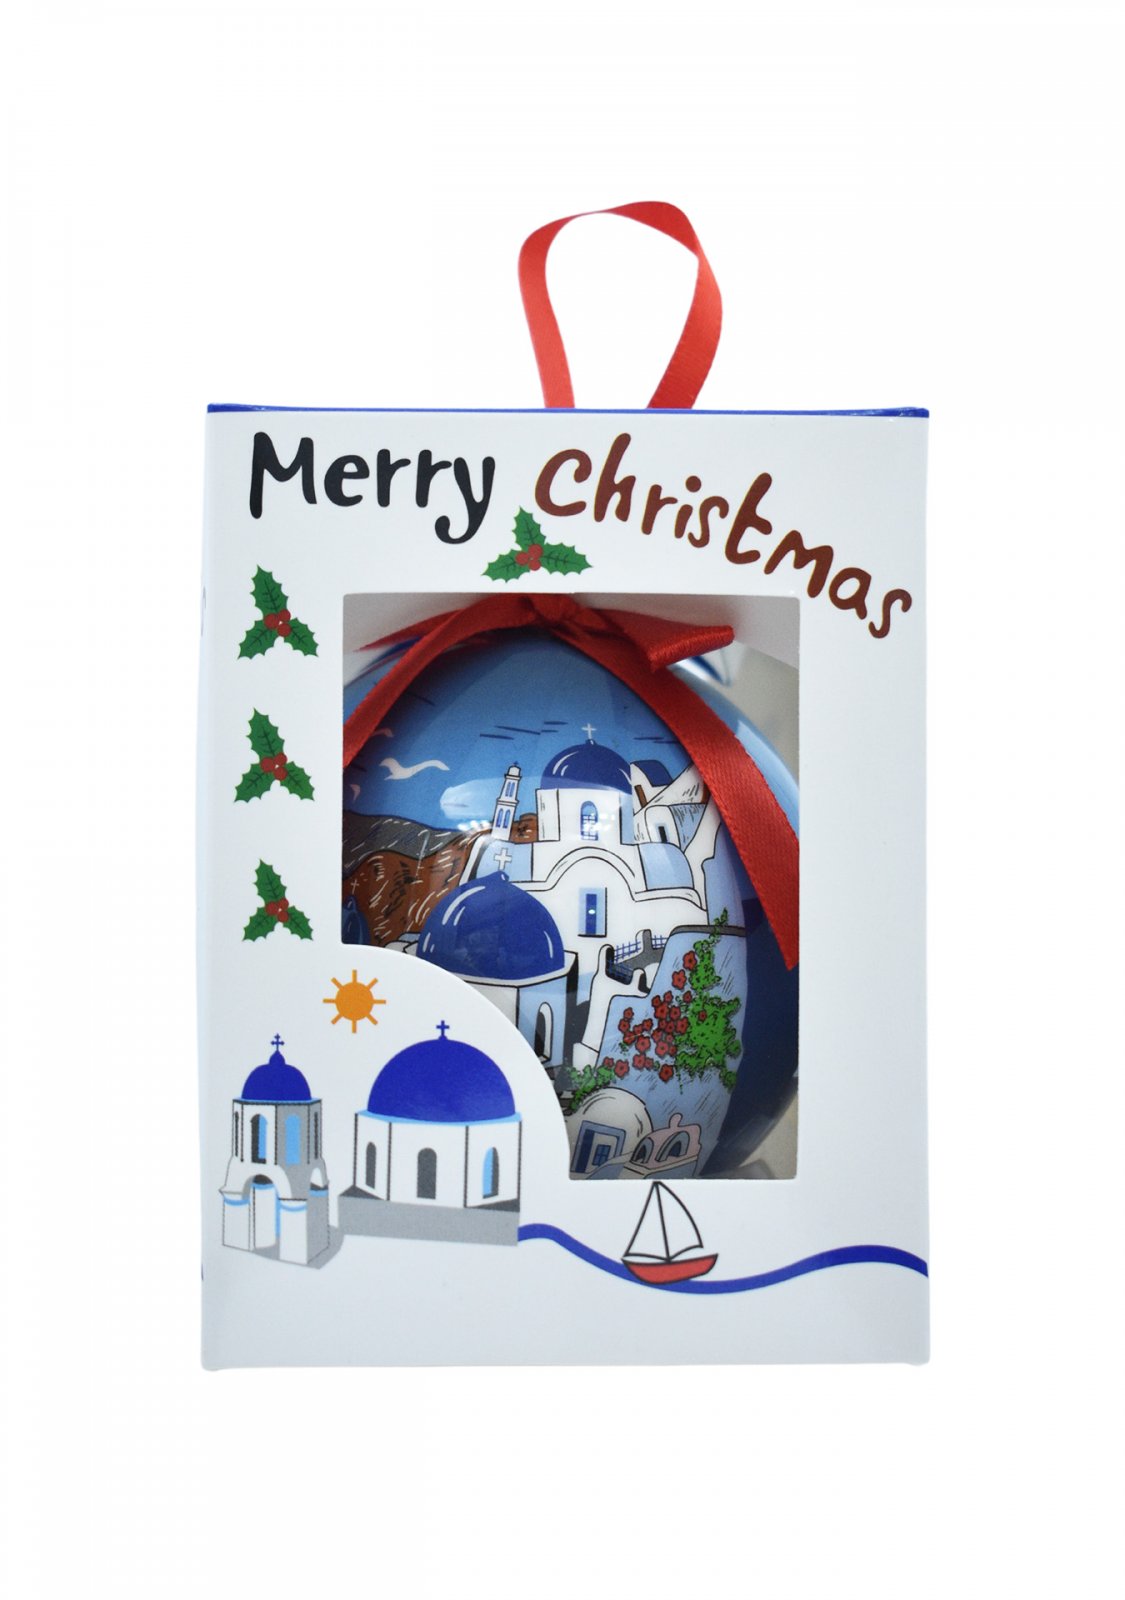 Christmas Tree Ball Santorini in a gift box